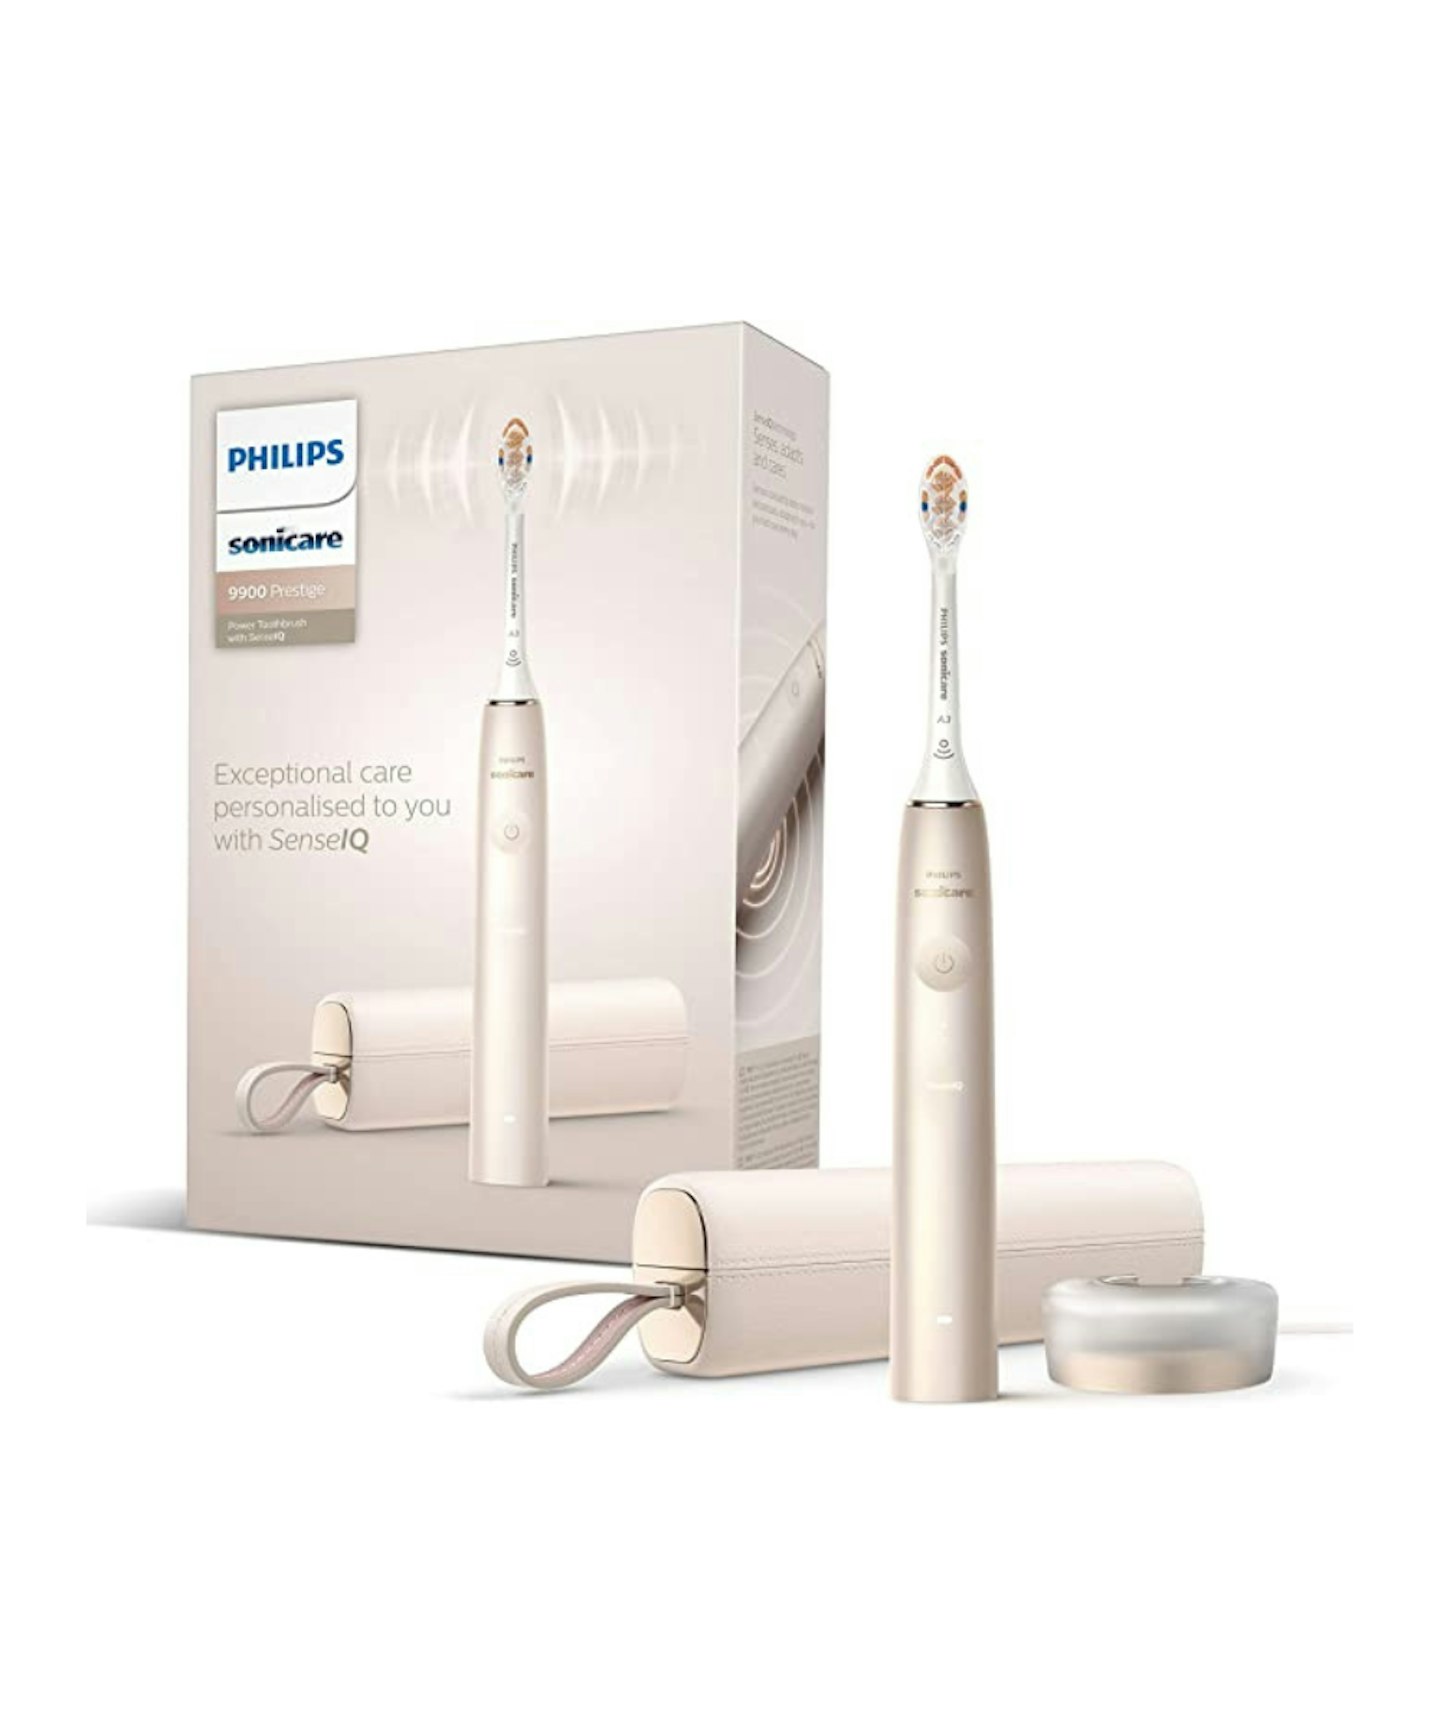 Philips Sonicare 9900 Prestige Power Toothbrush with SenseIQ